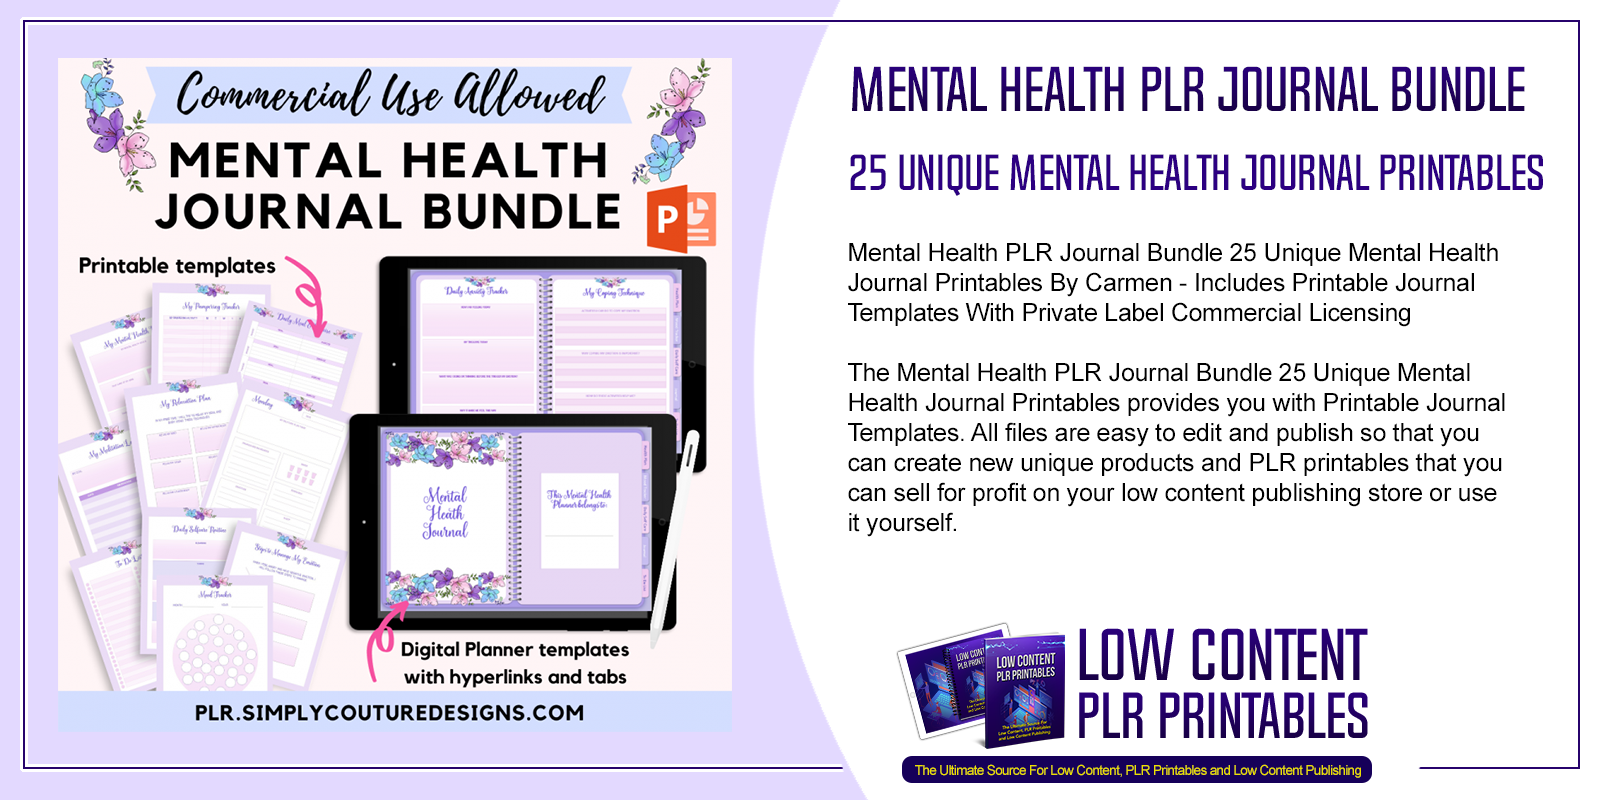 Mental Health PLR Journal Bundle 25 Unique Mental Health Journal Printables